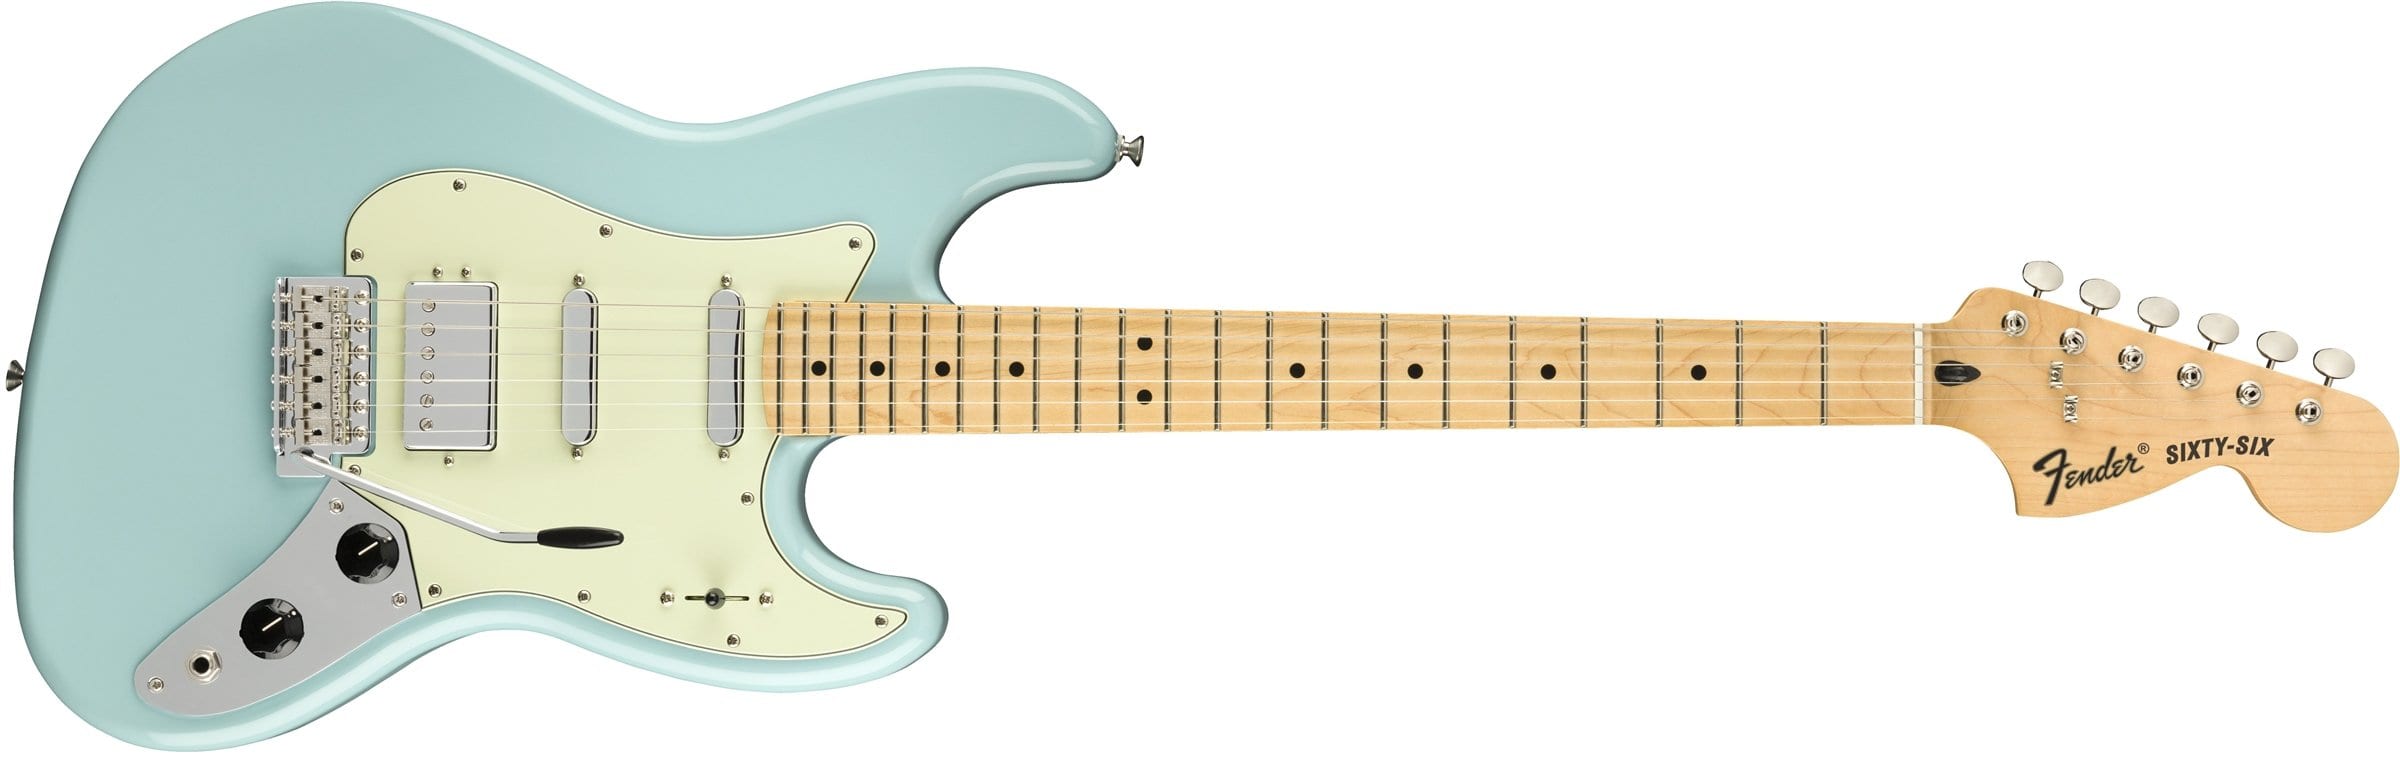 Fender Alternate Reality Sixty Six in Daphne blue